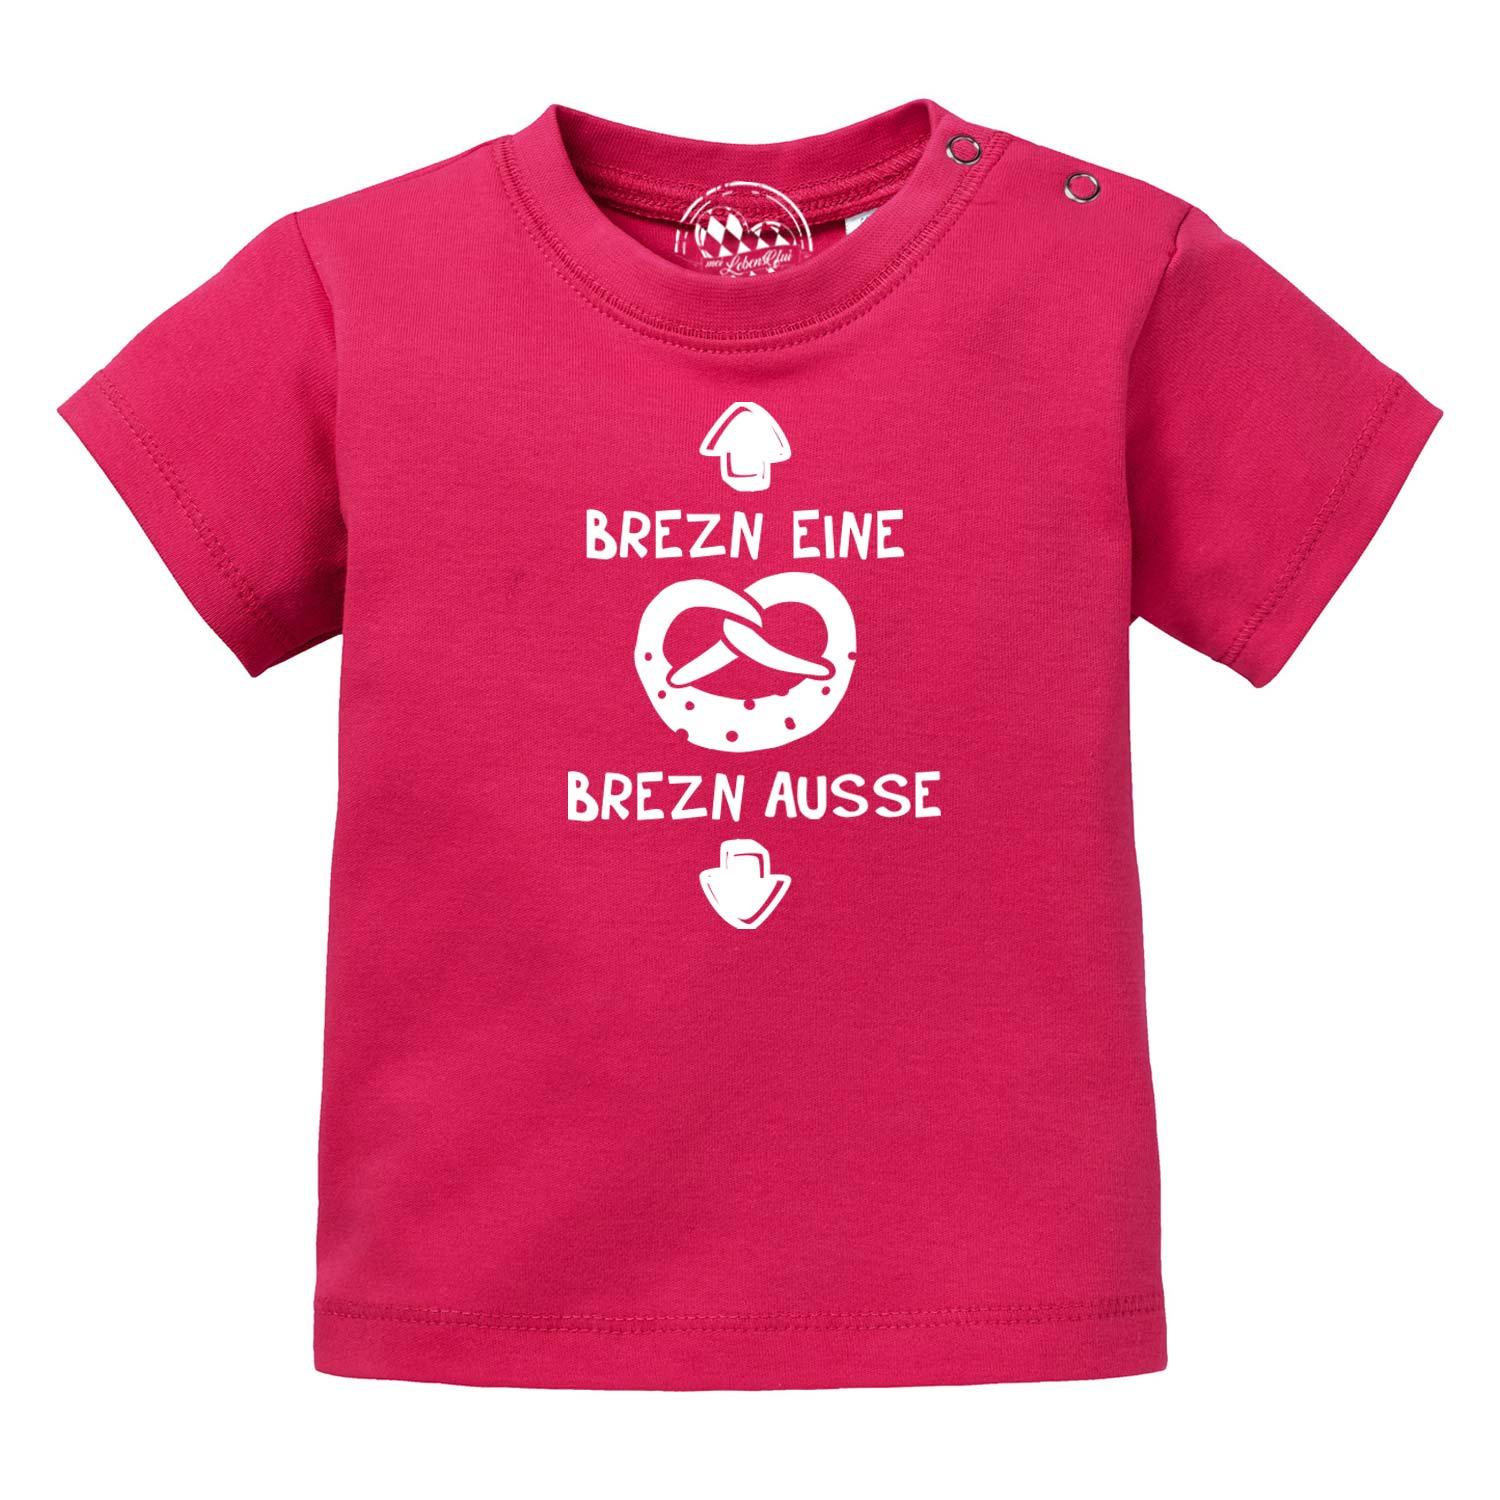 Baby T-Shirt "Brezn" - bavariashop - mei LebensGfui